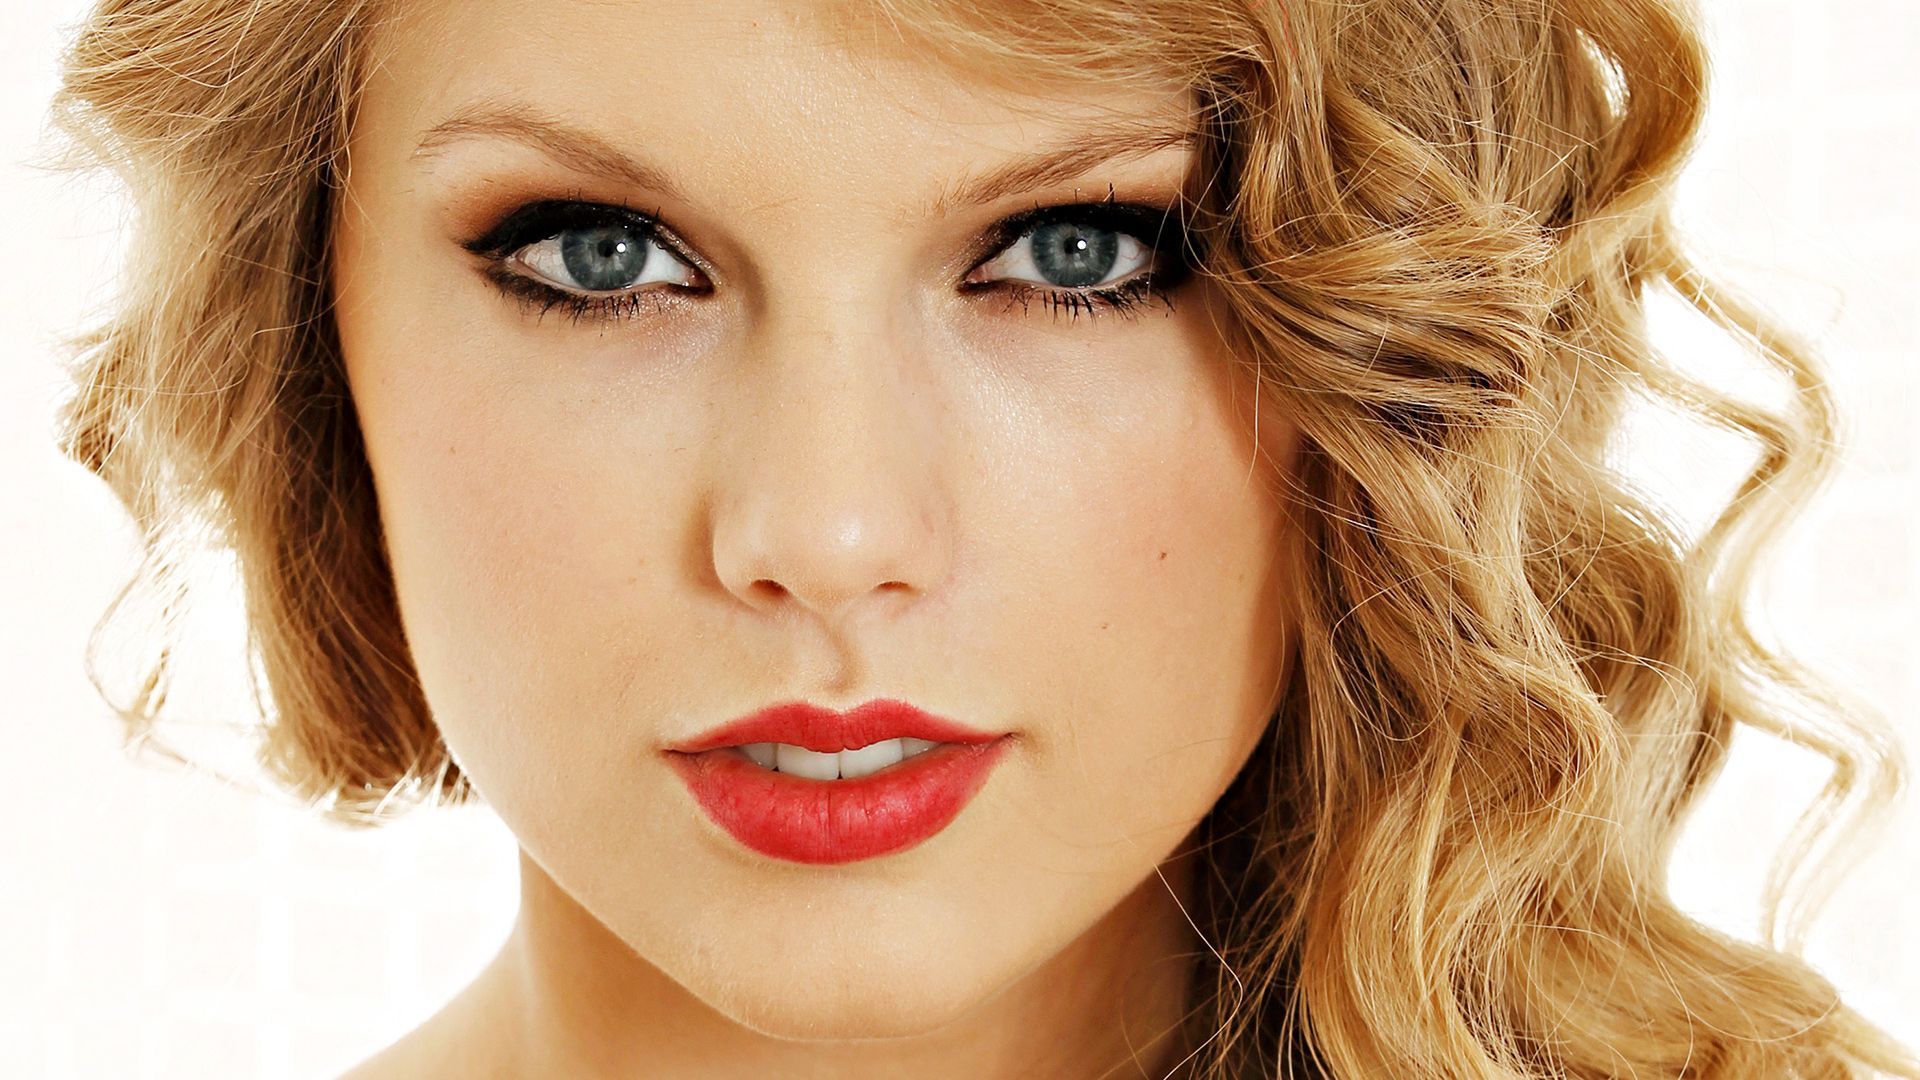 Taylor Swift Wallpaper Hd 2013 65901 Desktop Wallpapers | Top ...